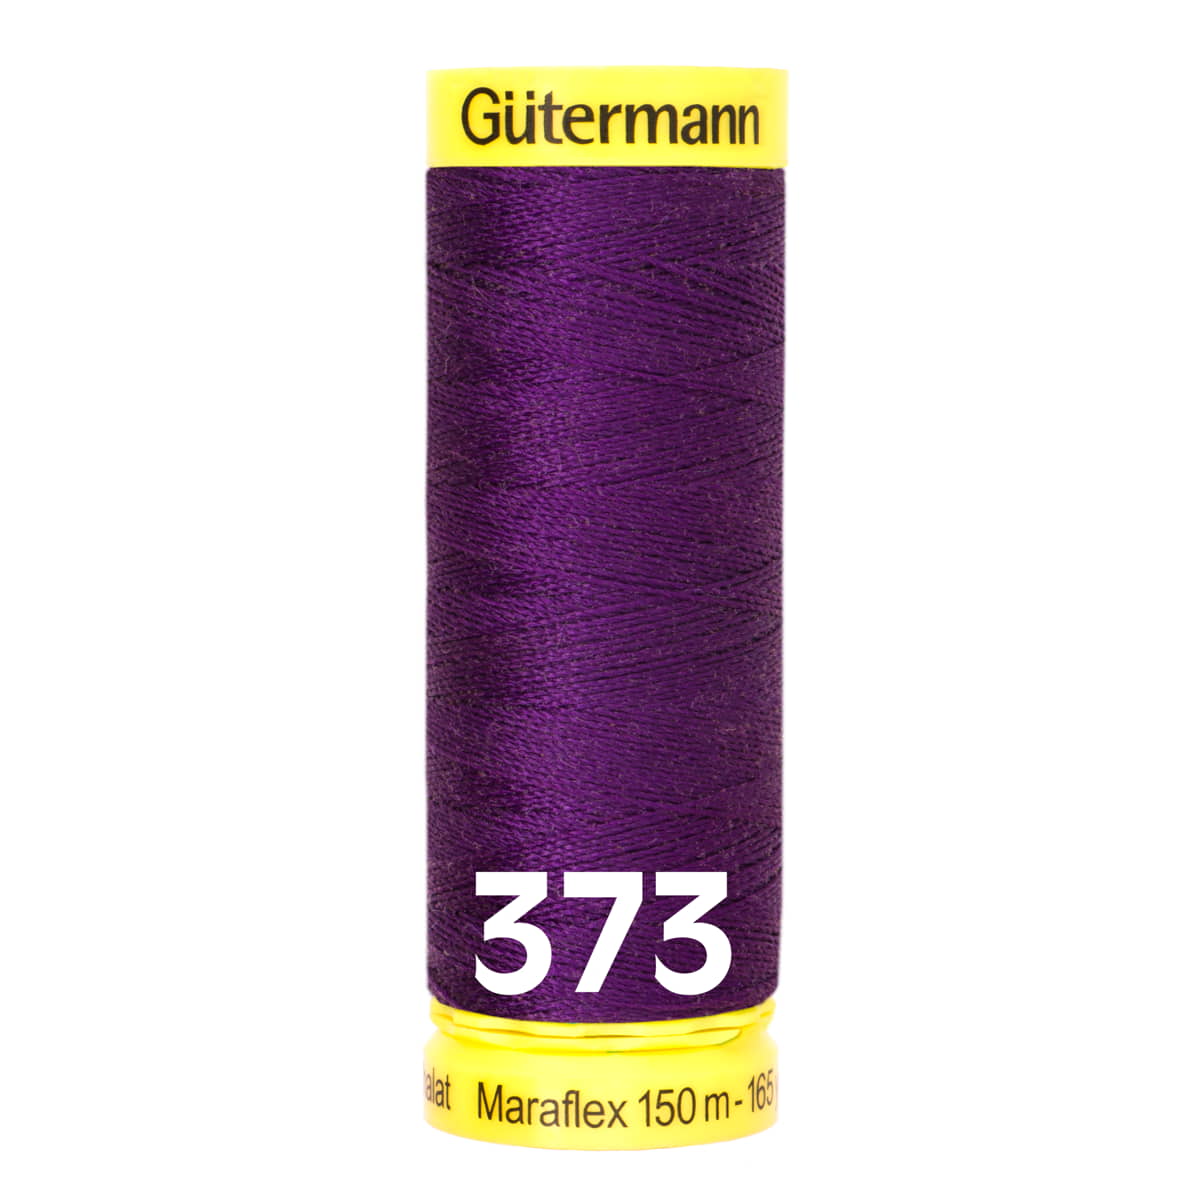 Gütermann MaraFlex 150m - 373 paars GUTERMANN-MARAFLEX-150-373 4029394996805 - Fourniturenkraam.nl